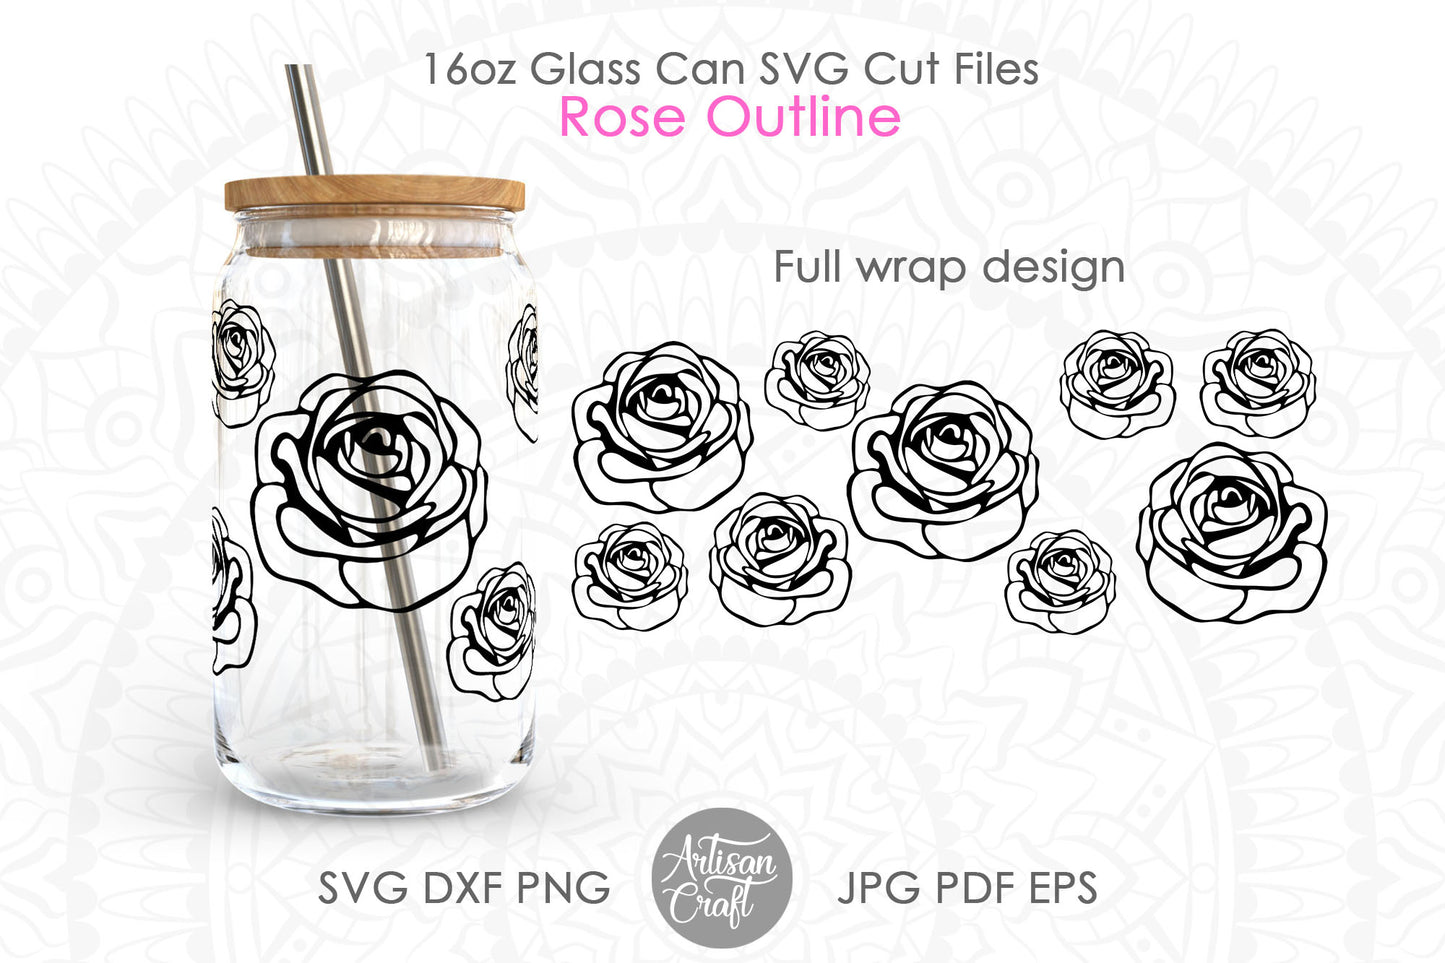 Rose Can Glass SVG showing rose outline